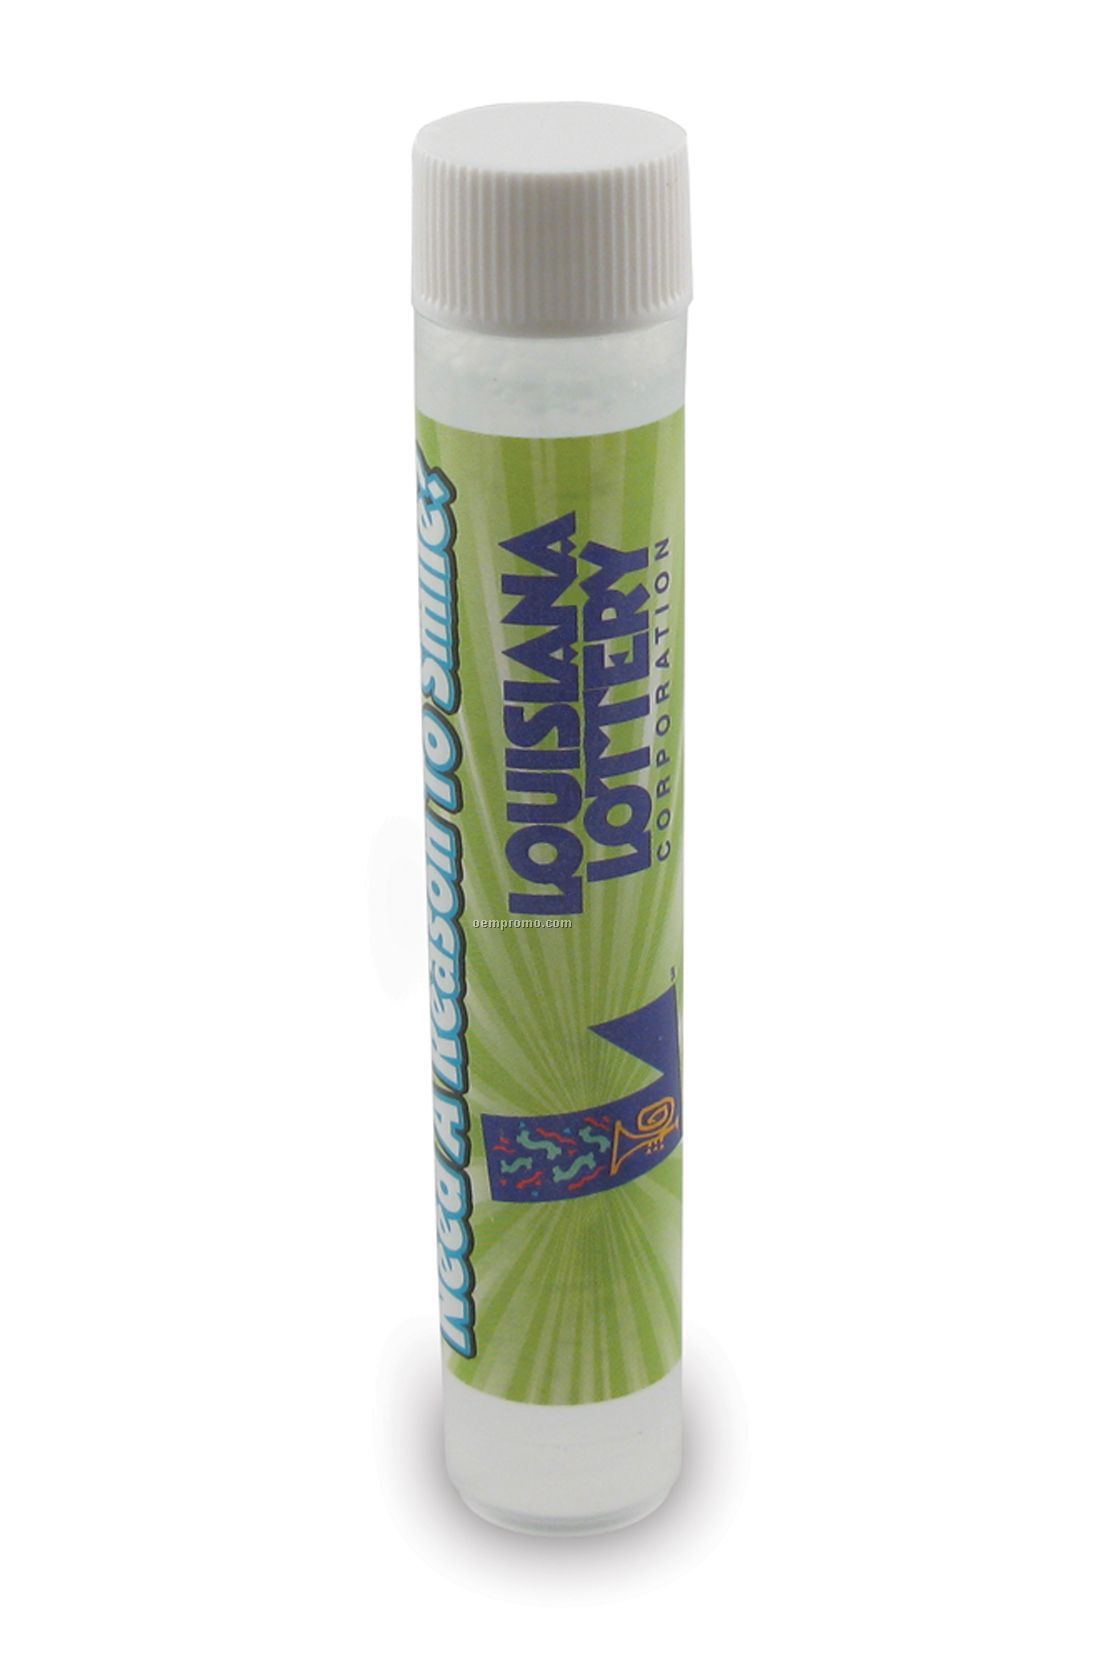 0.25 Oz. Antibacterial Hand Sanitizer Pocket Sprayer Refill (Citrus Scent)